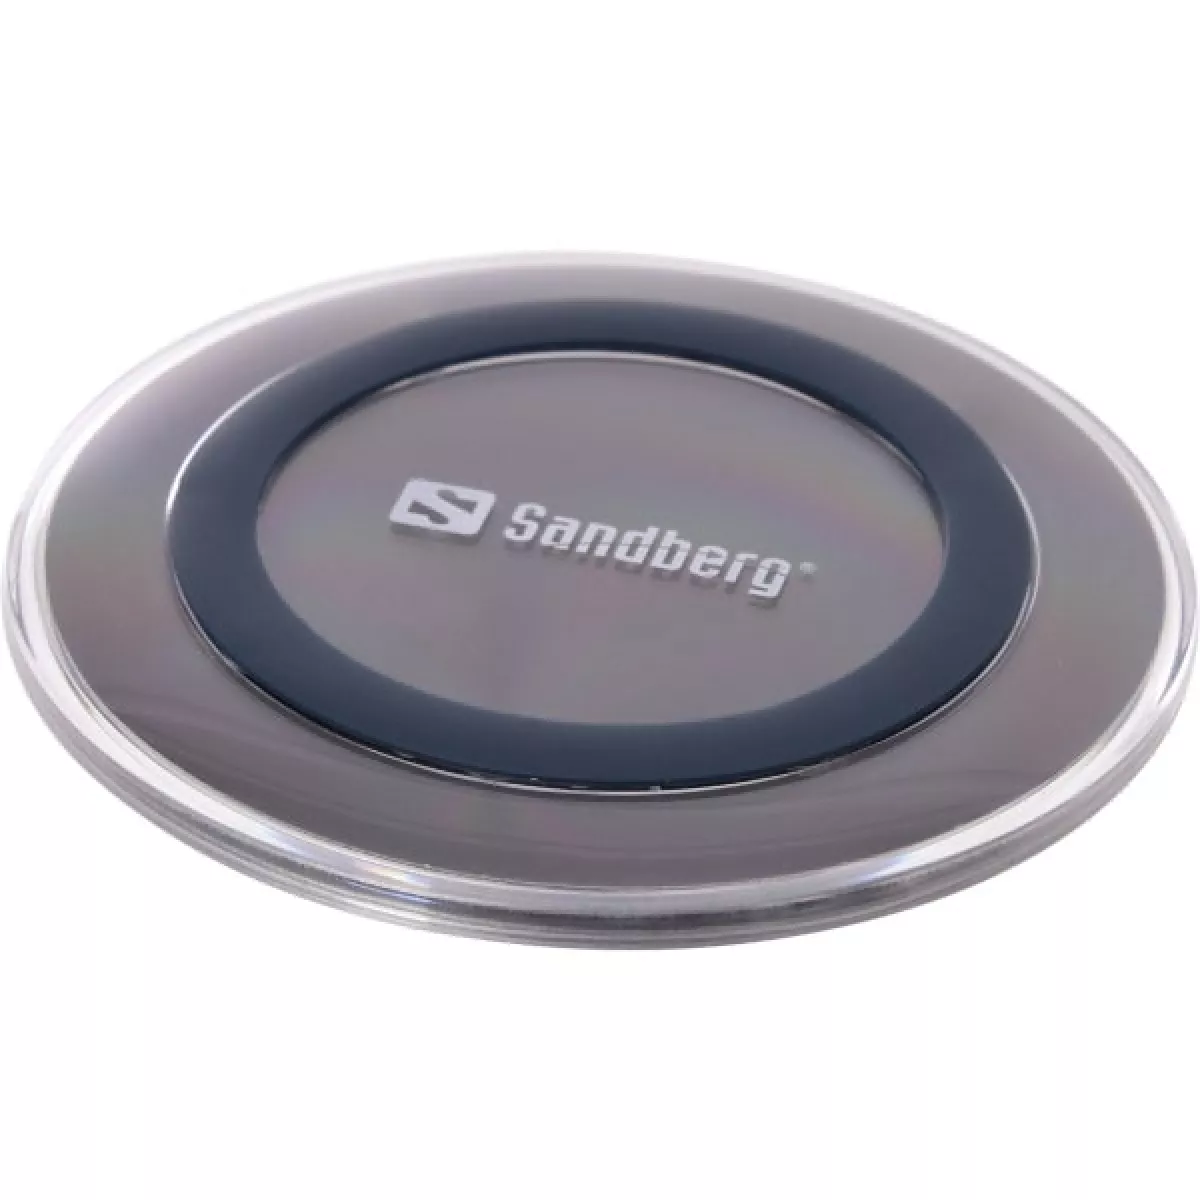 #2 - Sandberg Wireless Charger Pad. Fed trådløs oplader. 5W.